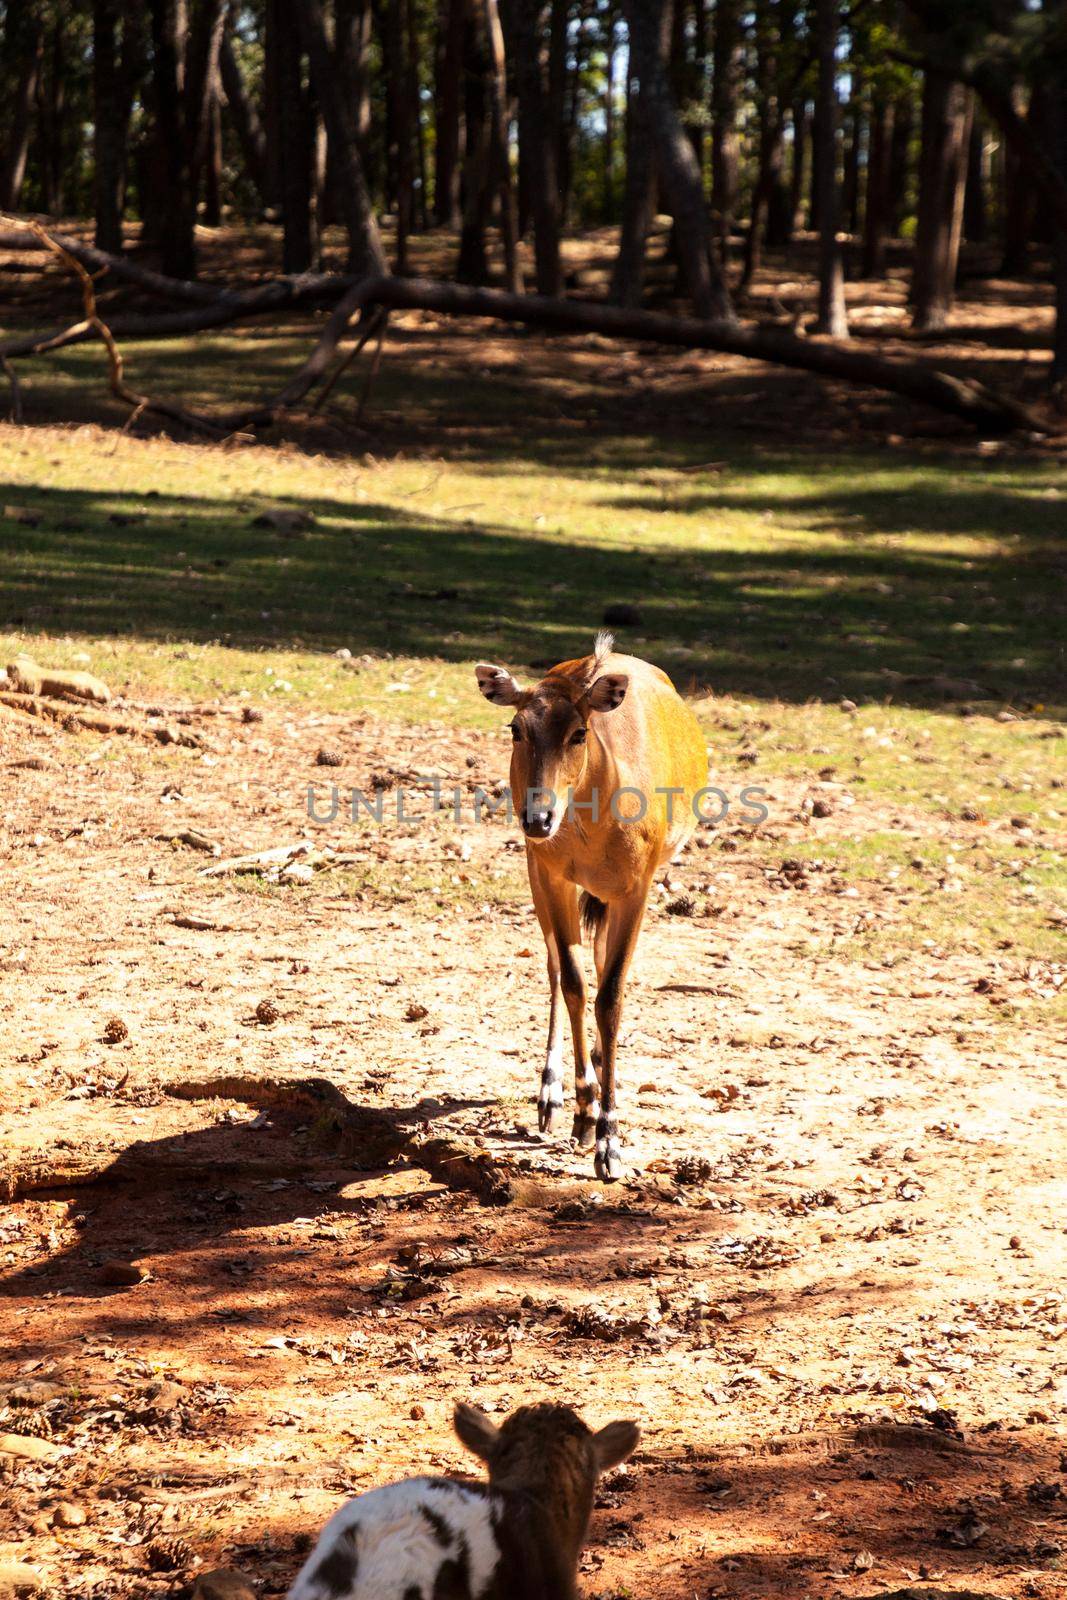 Nilgai is a large Asian antelope Boselaphus tragocamelus in India.